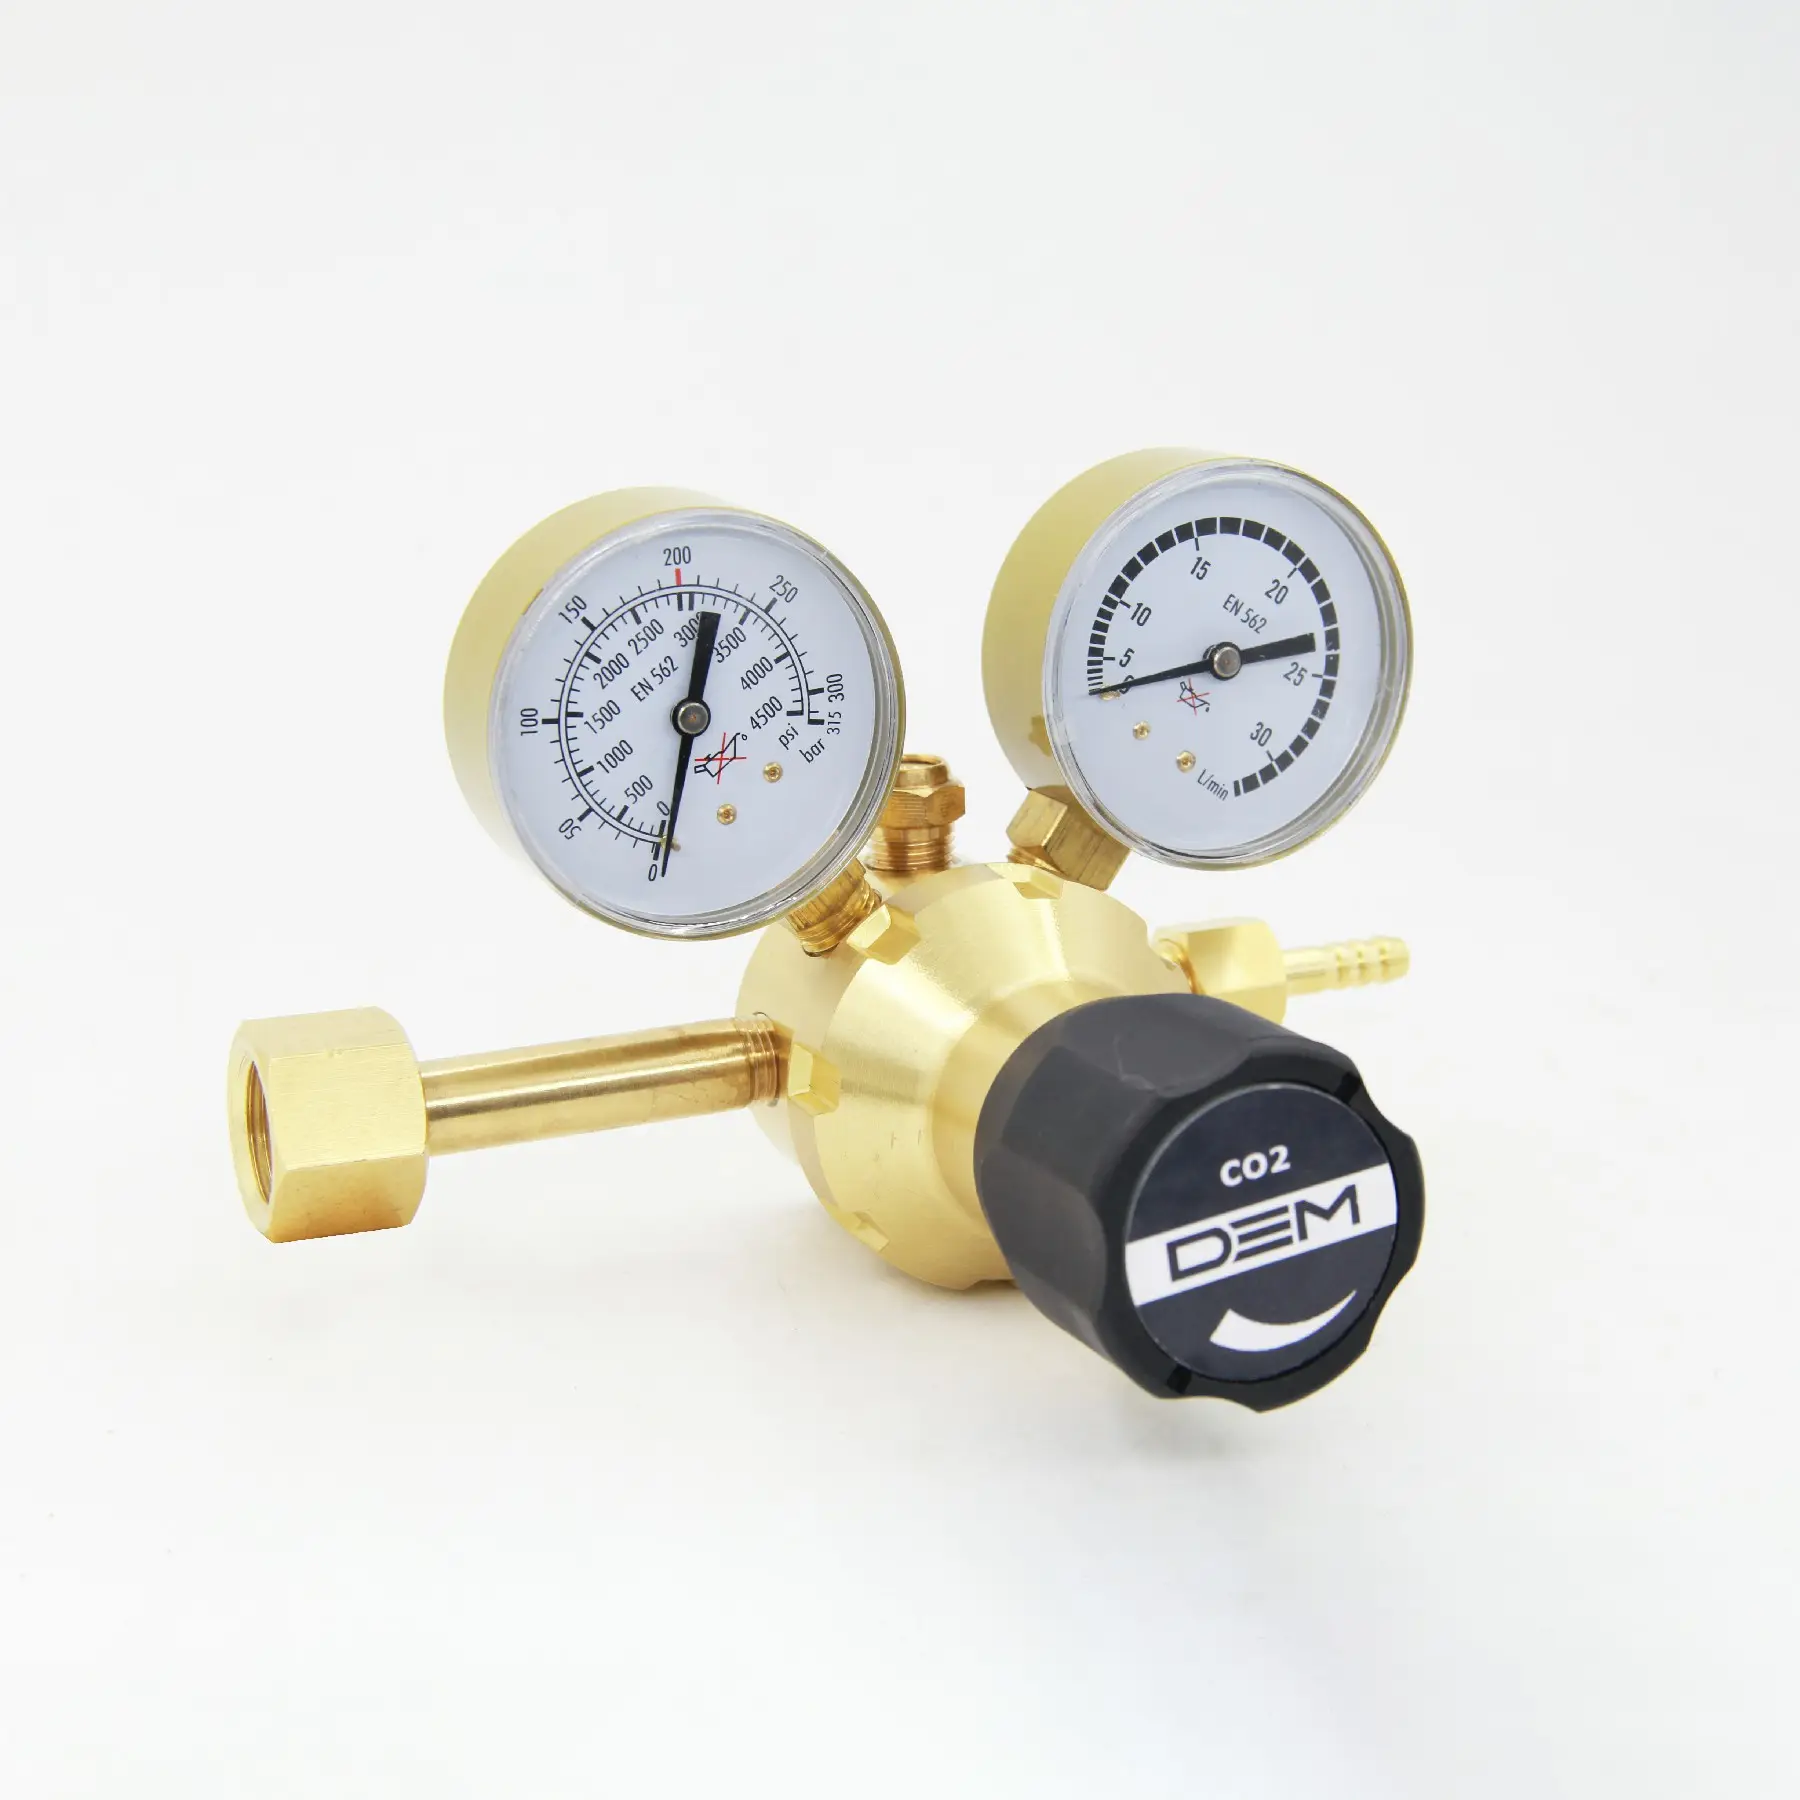 DEM CR0505-CO2 Industrial Co2 Argon Gas Pressure Welding Regulator With Flowmeter